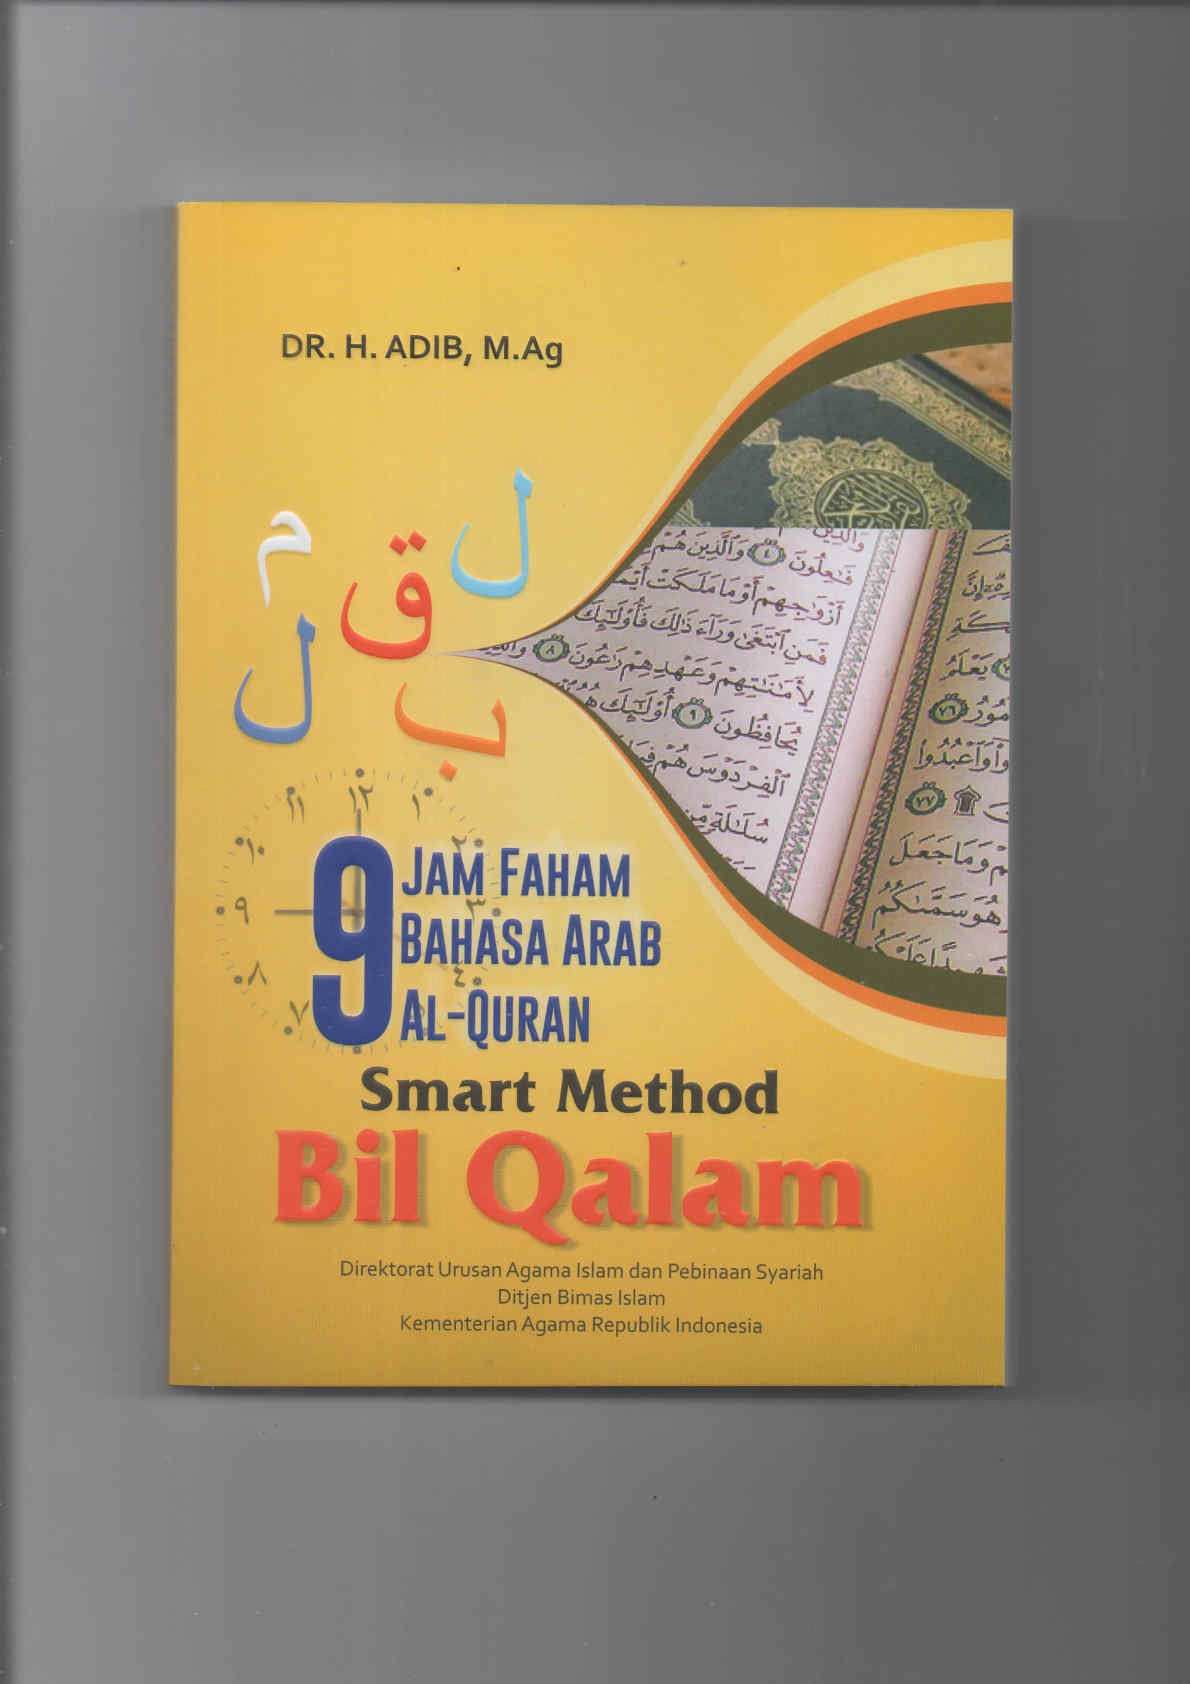 9 Jam Faham Bahasa Arab Al-Qur'an